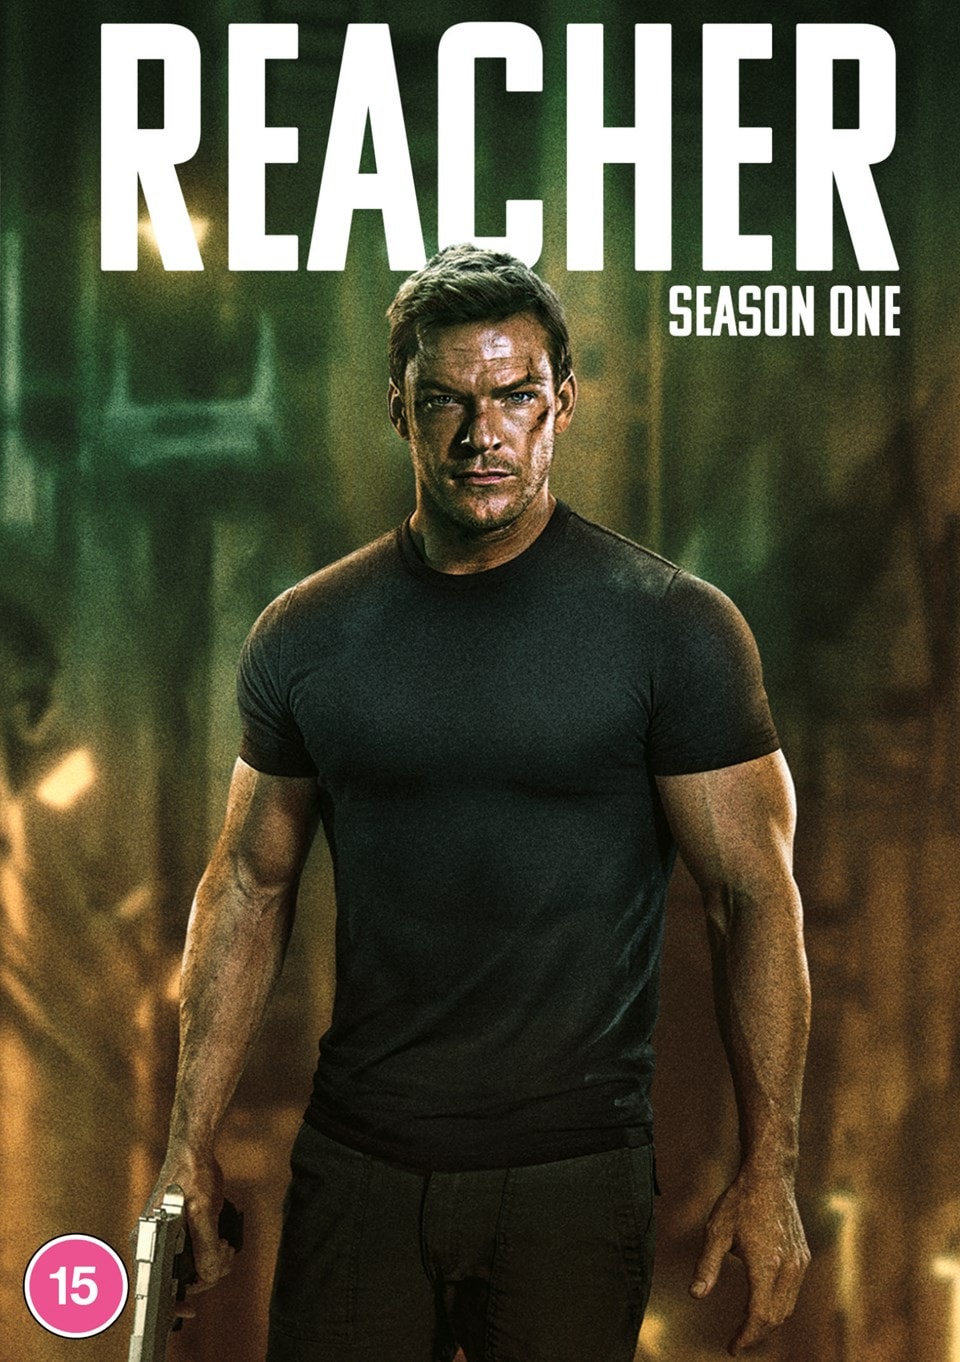 Reacher: Season One | DVD Box Set | Free shipping over £20 | HMV Store